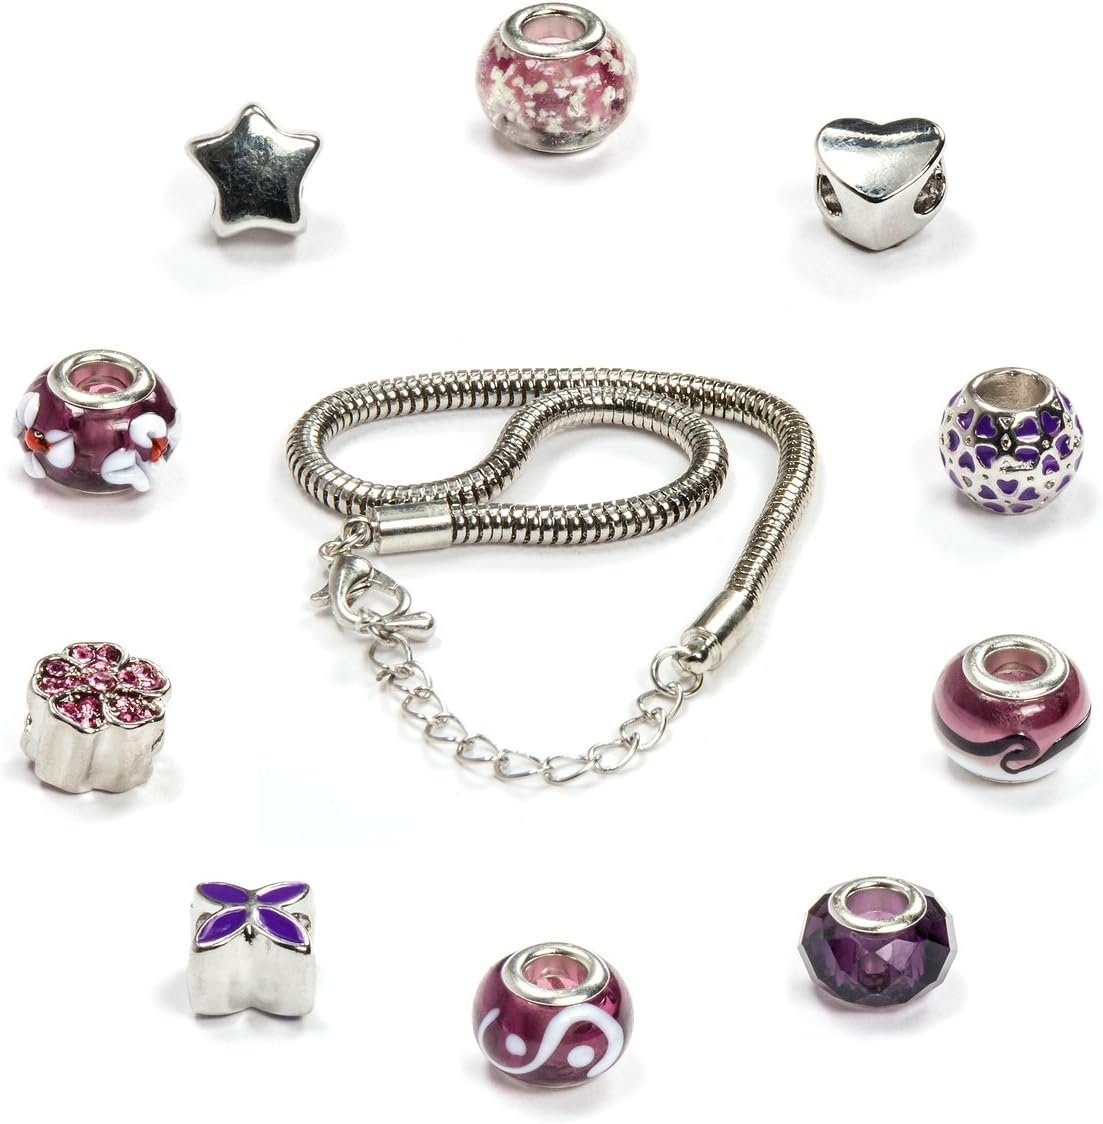 VALIOSA Armband Perlen-Anhänger Christmas' Merry + Halskette, Schmuck-Adventskalender, individuelle 22